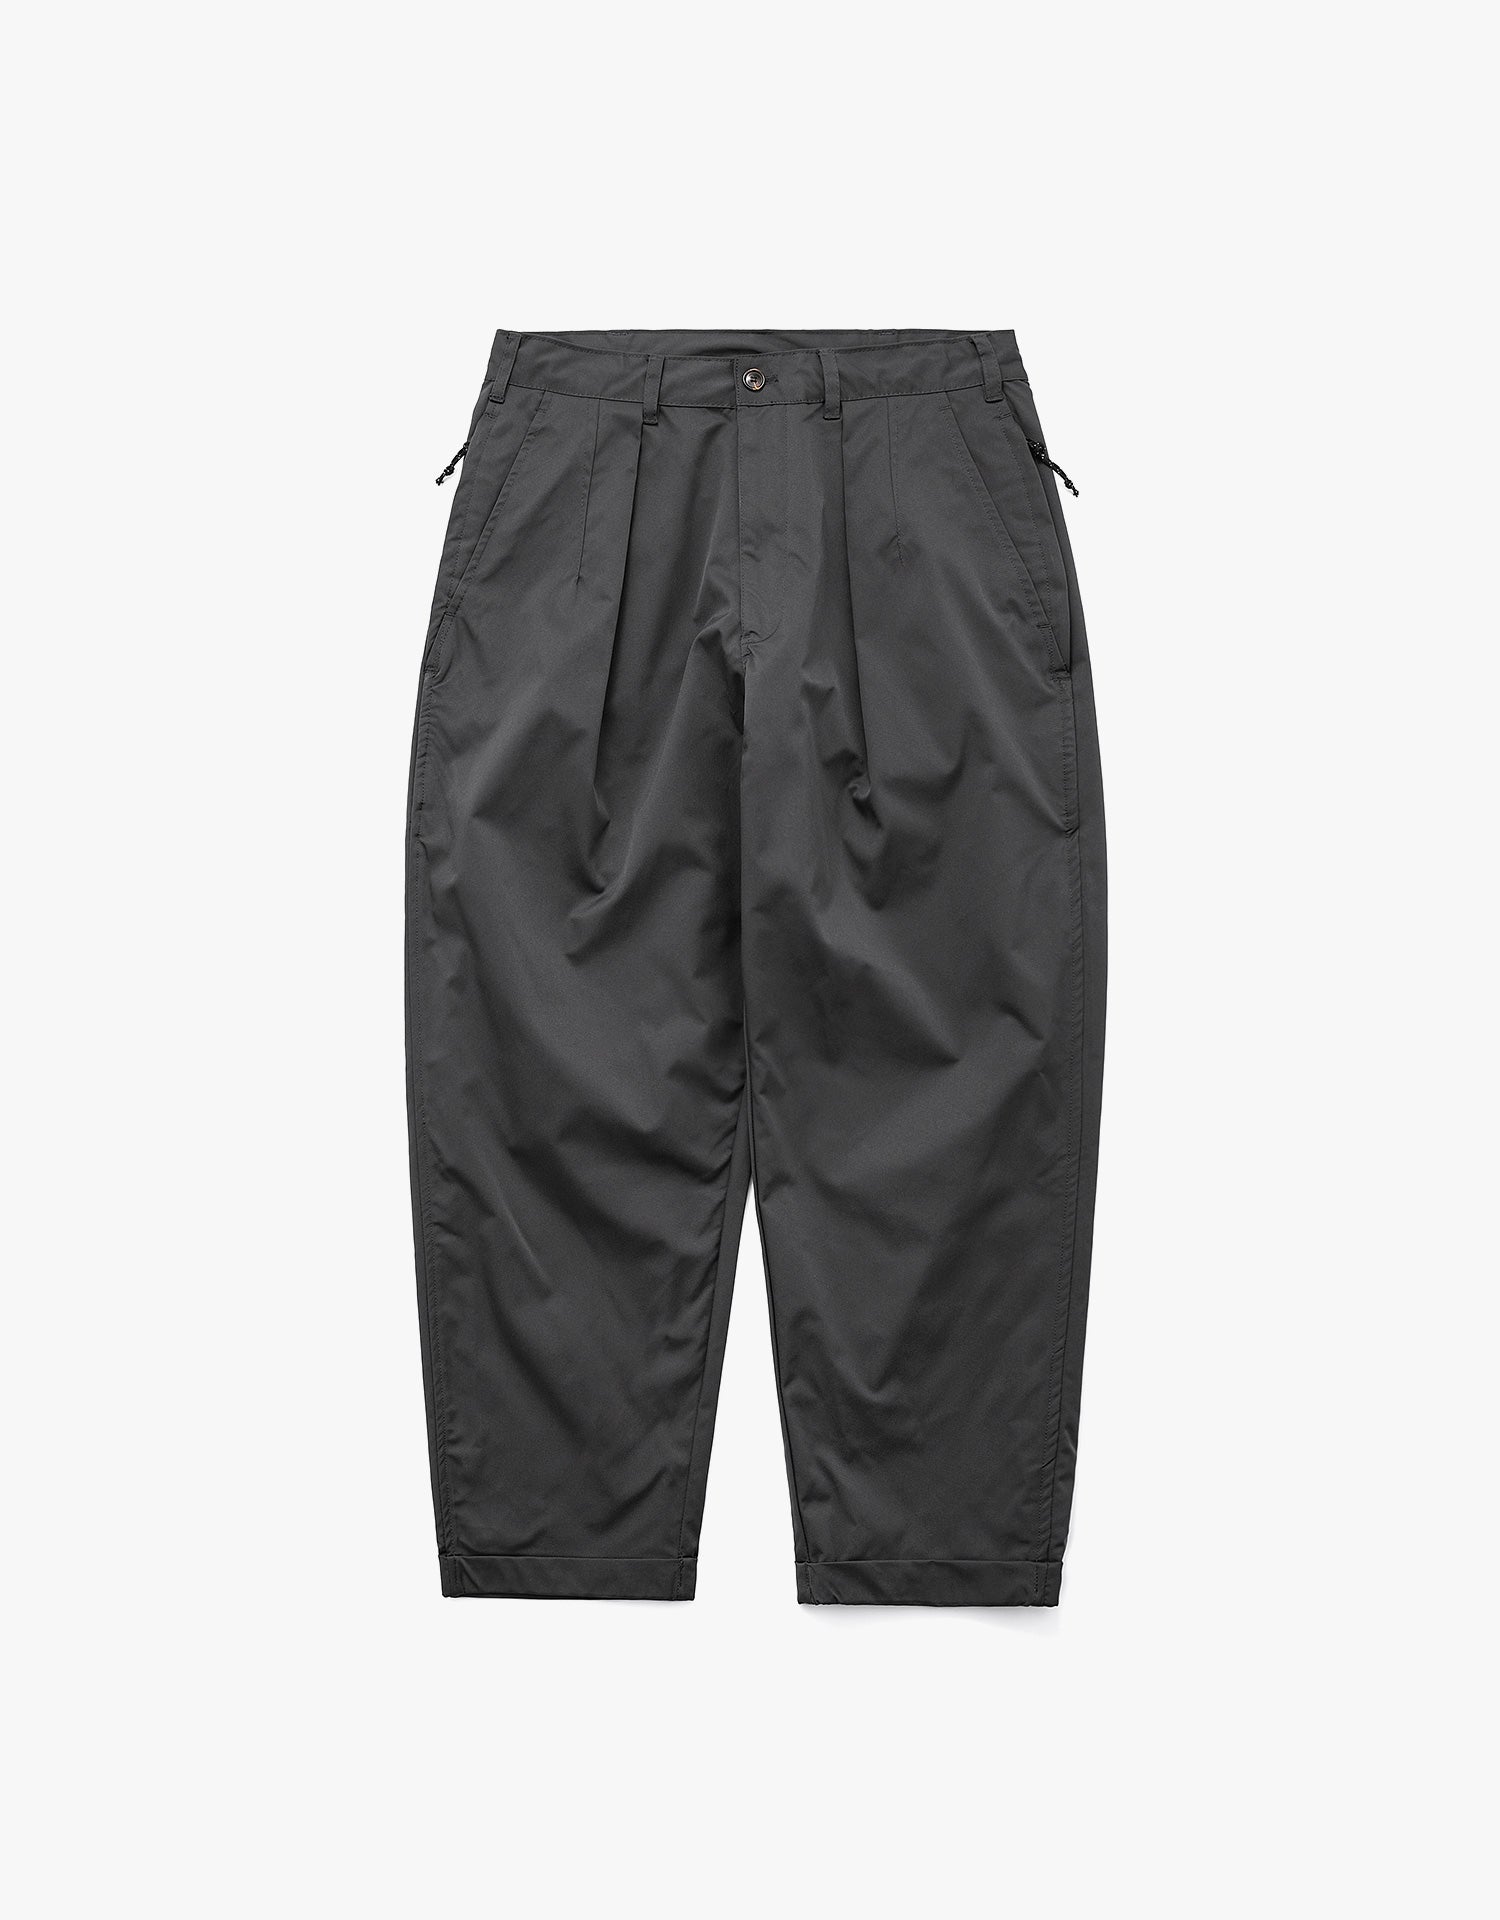 TopBasics Six Pockets Pleated Camping Pants